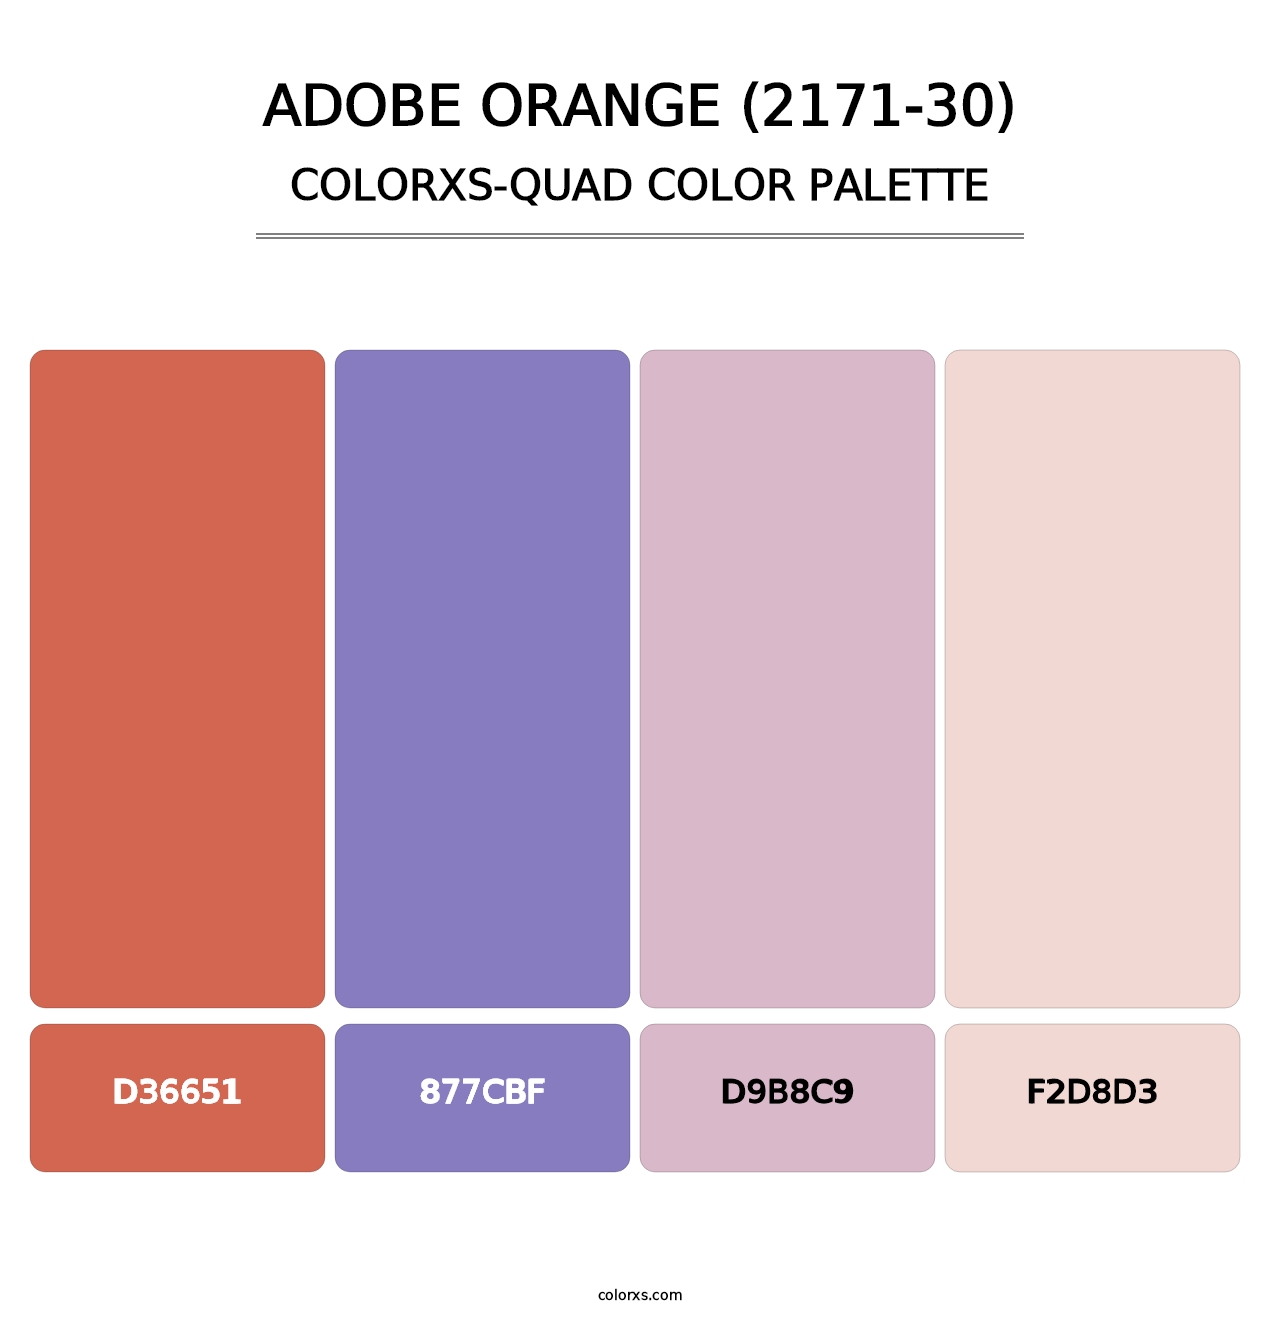 Adobe Orange (2171-30) - Colorxs Quad Palette